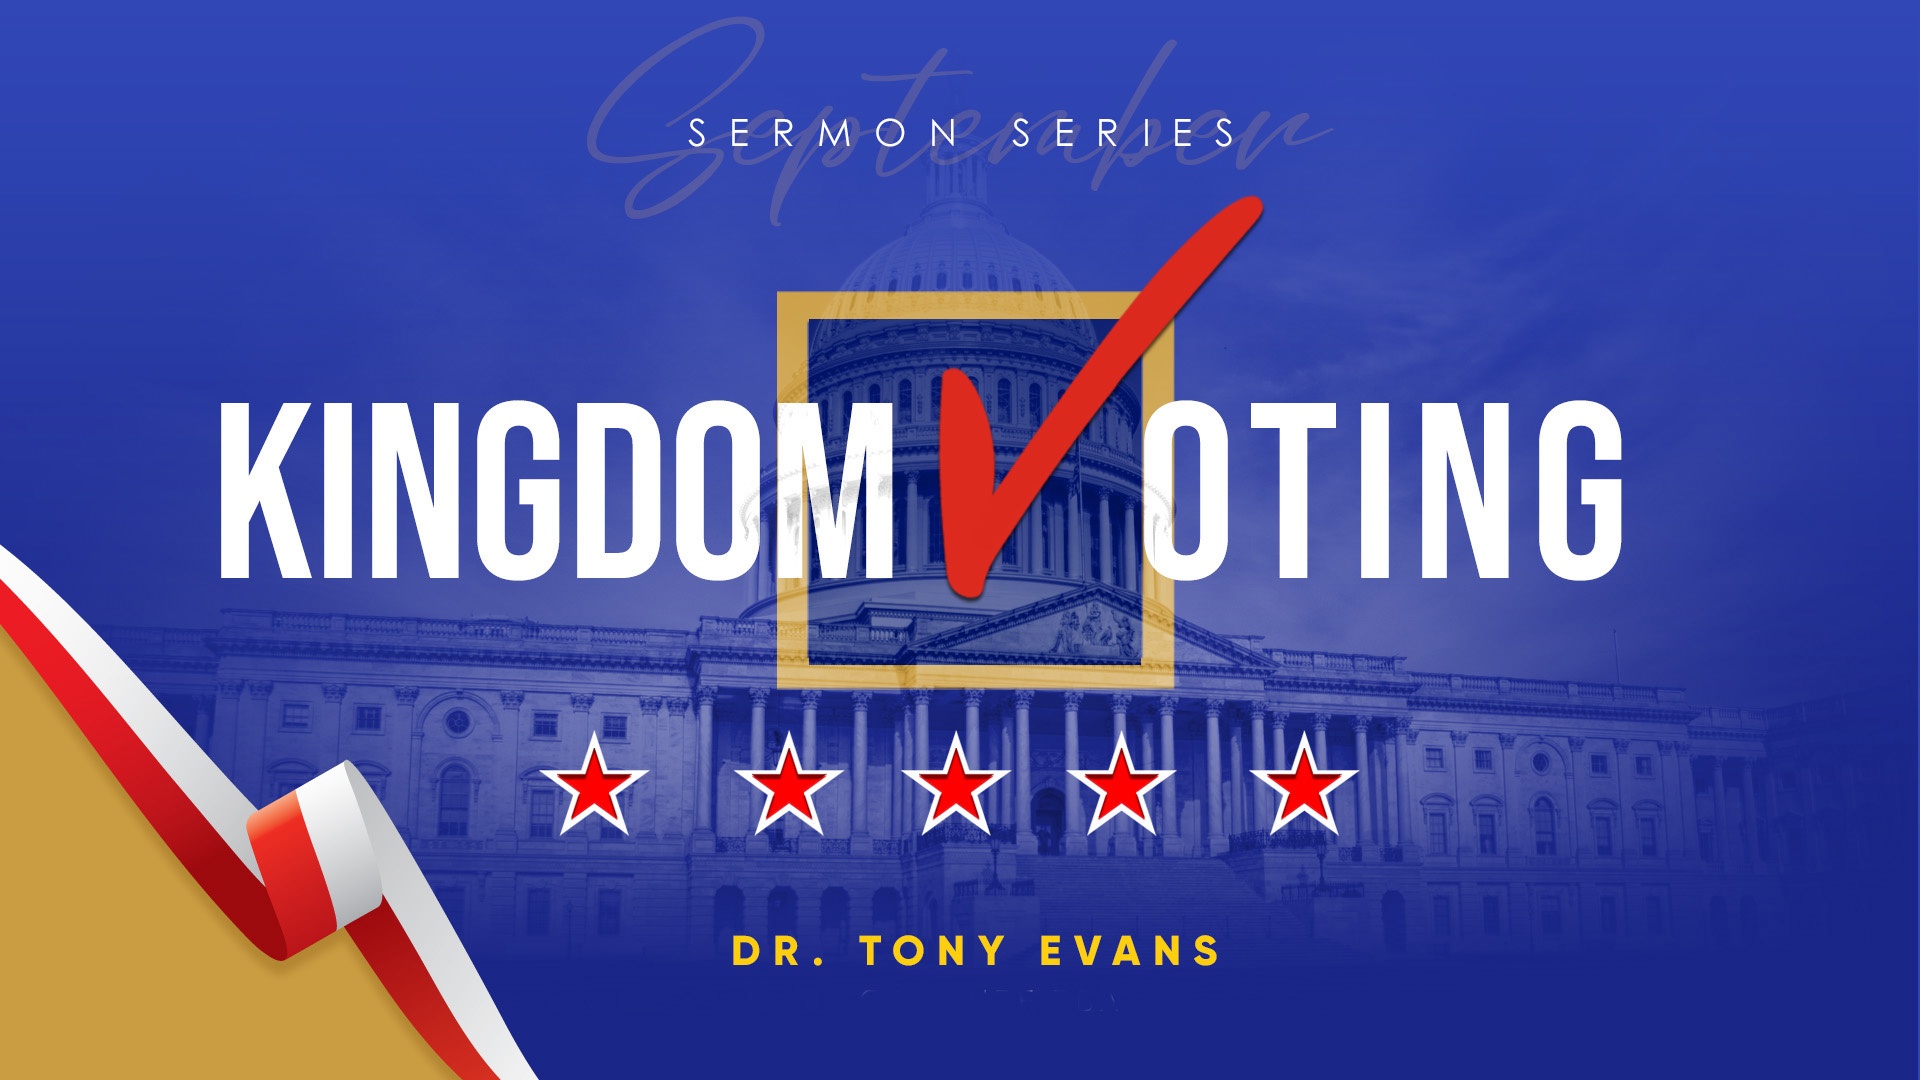 Kingdom Voting series by Dr. Tony Evans